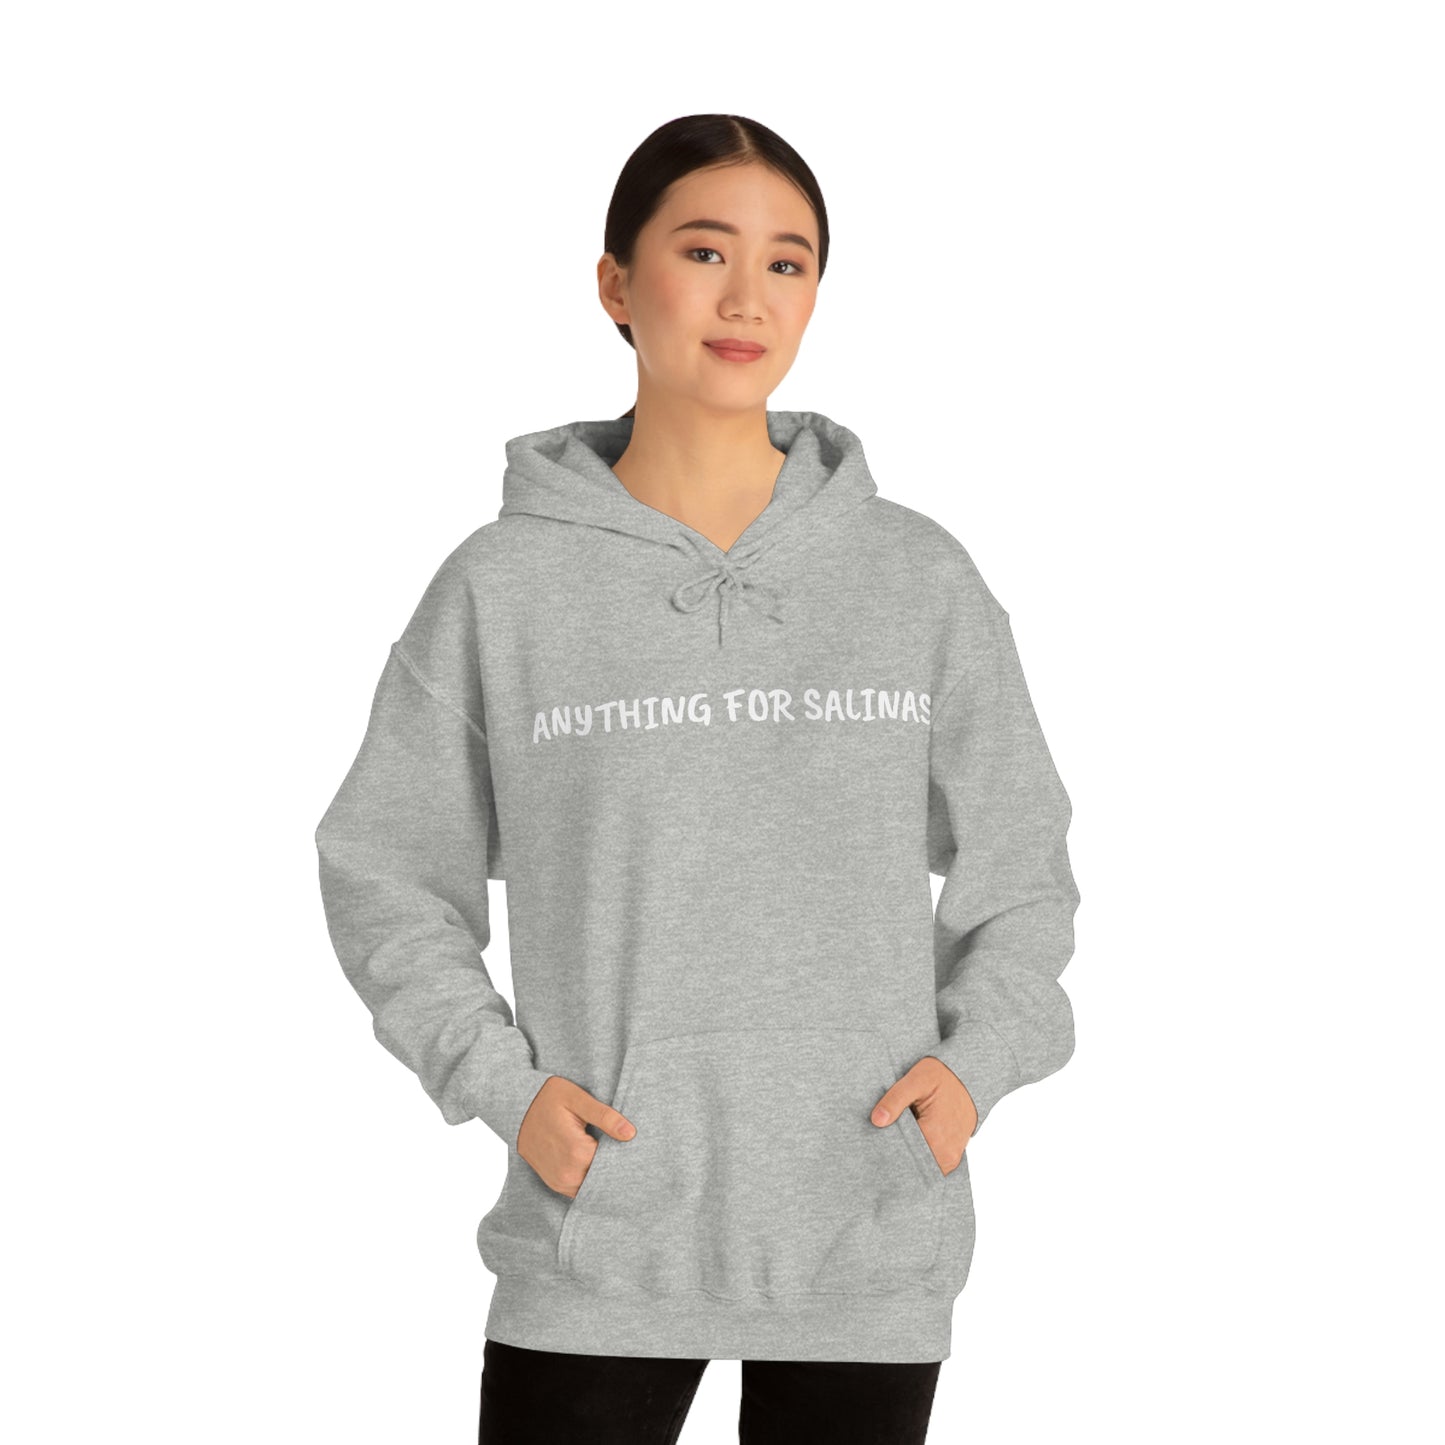 ANYTHING FOR SALINAS Unisex Heavy Blend™ Hooded Sweatshirt